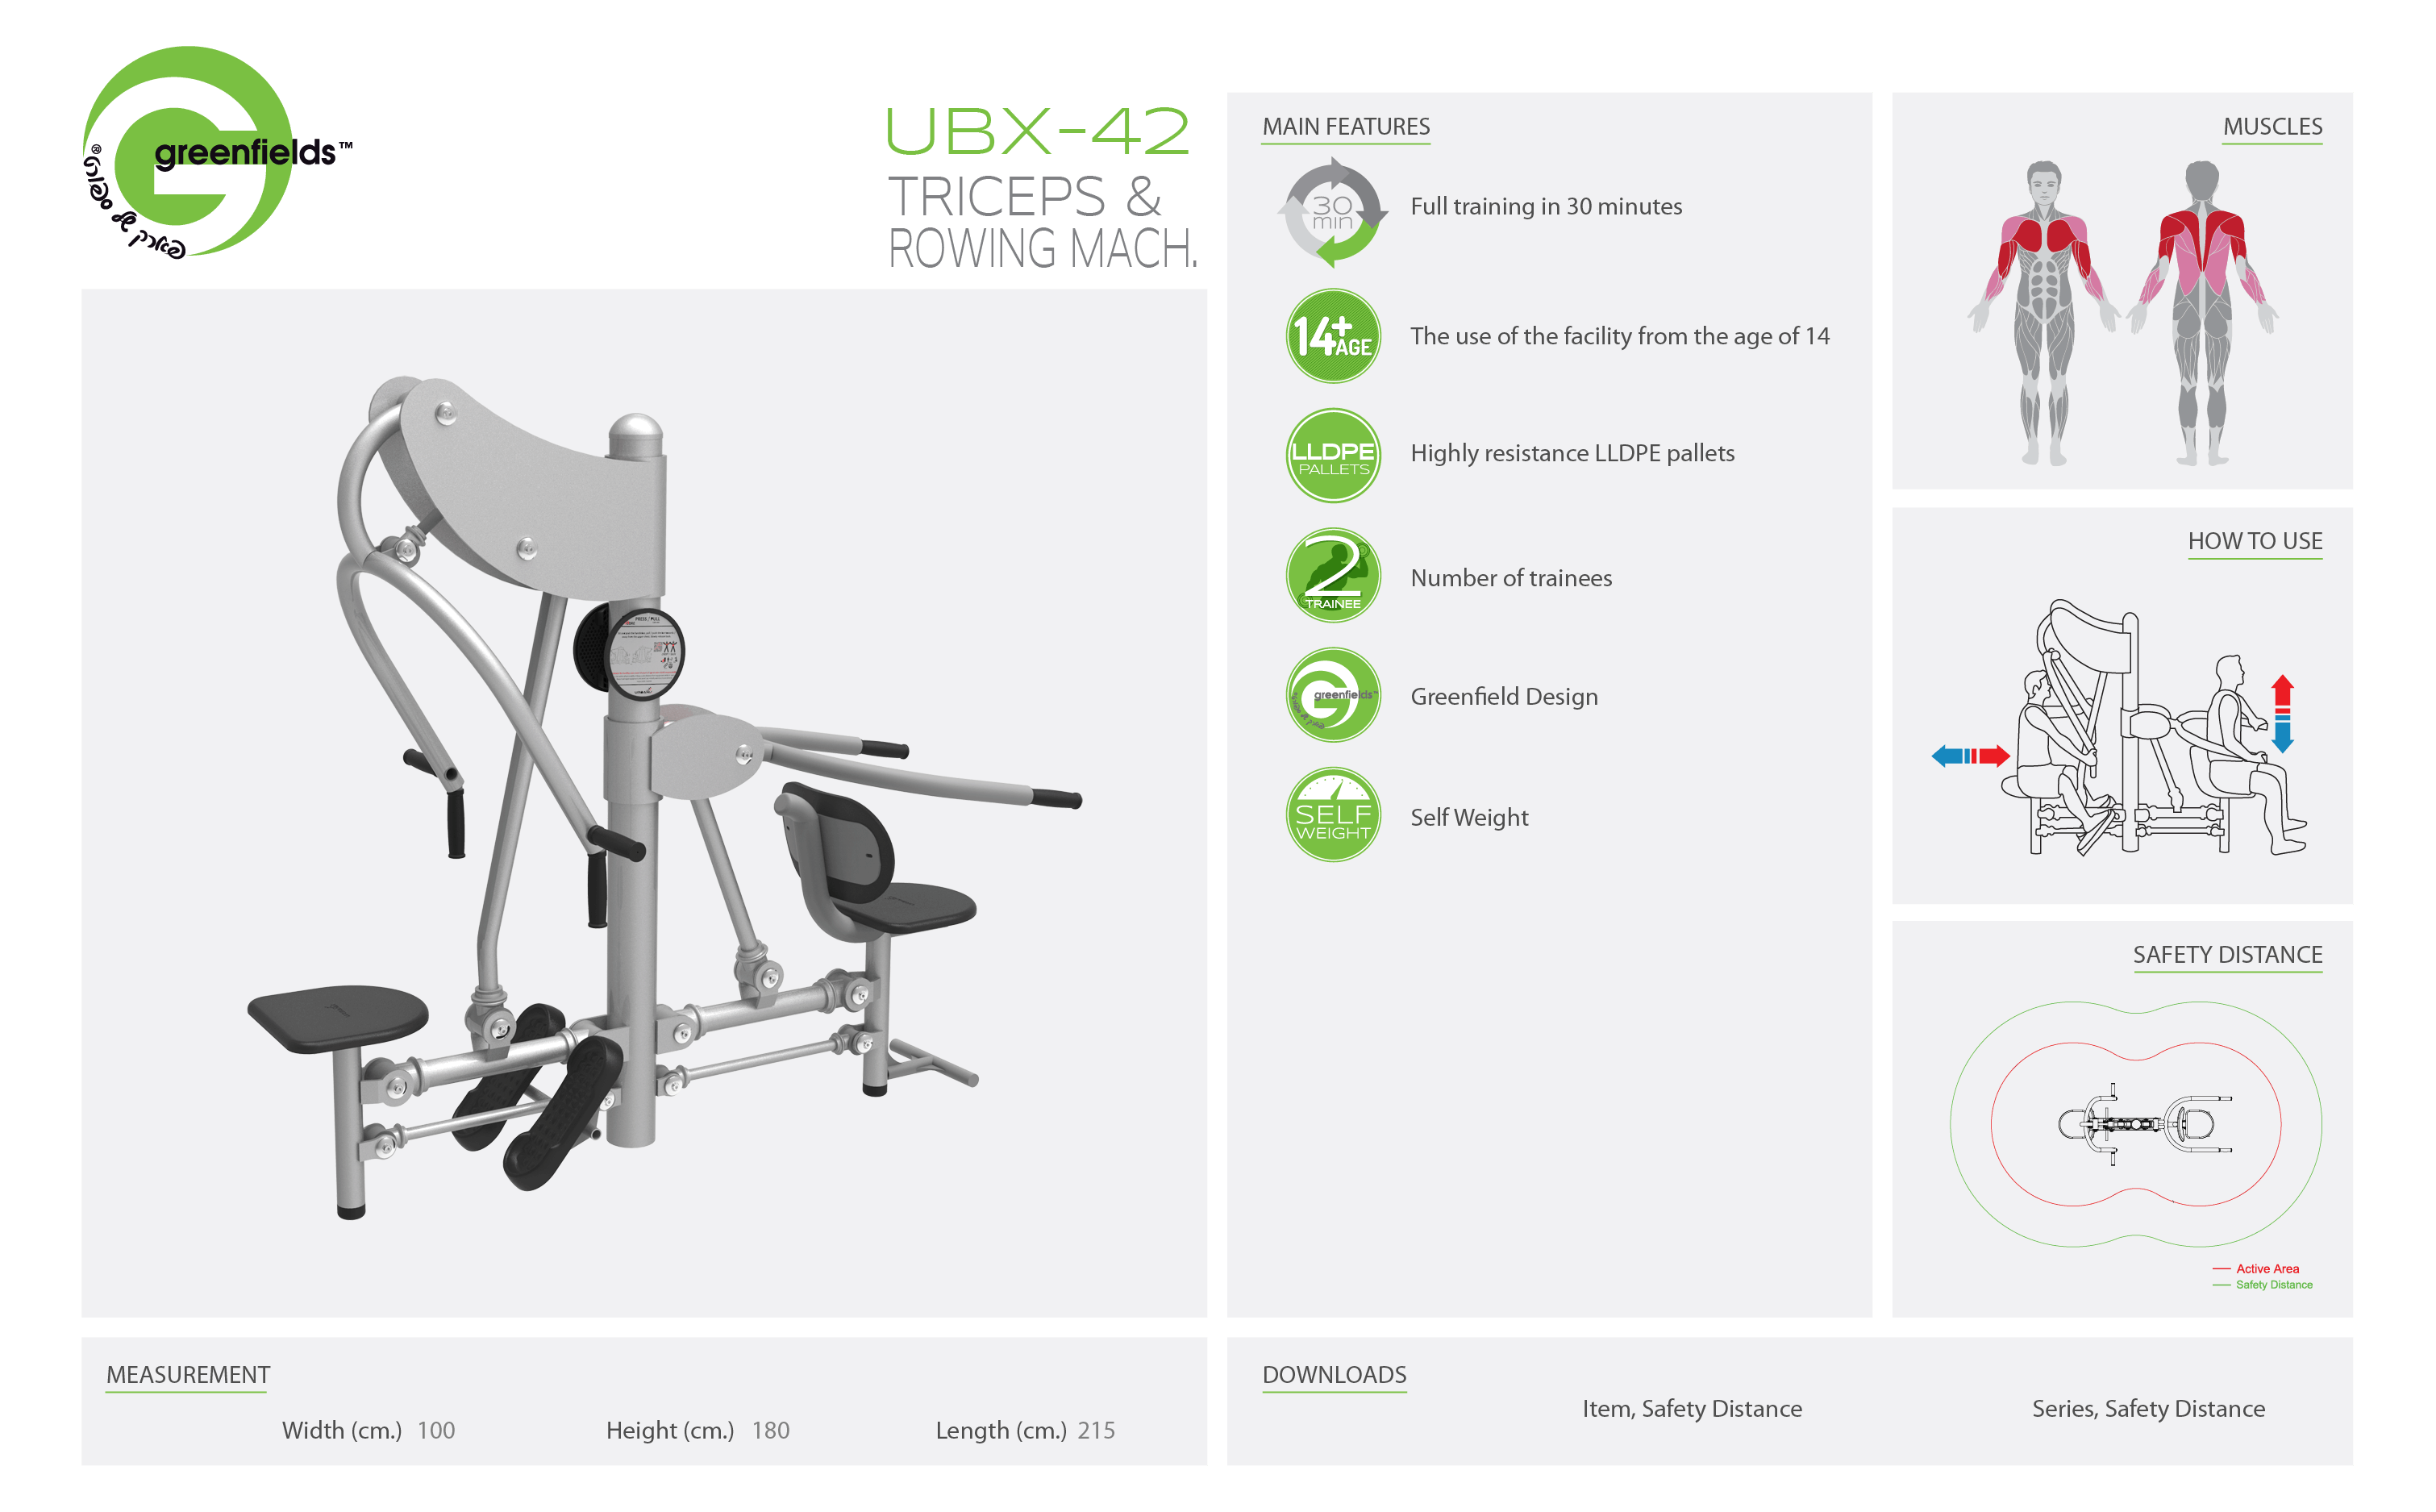 ubx-42 אורבניקס - מתקן כושר